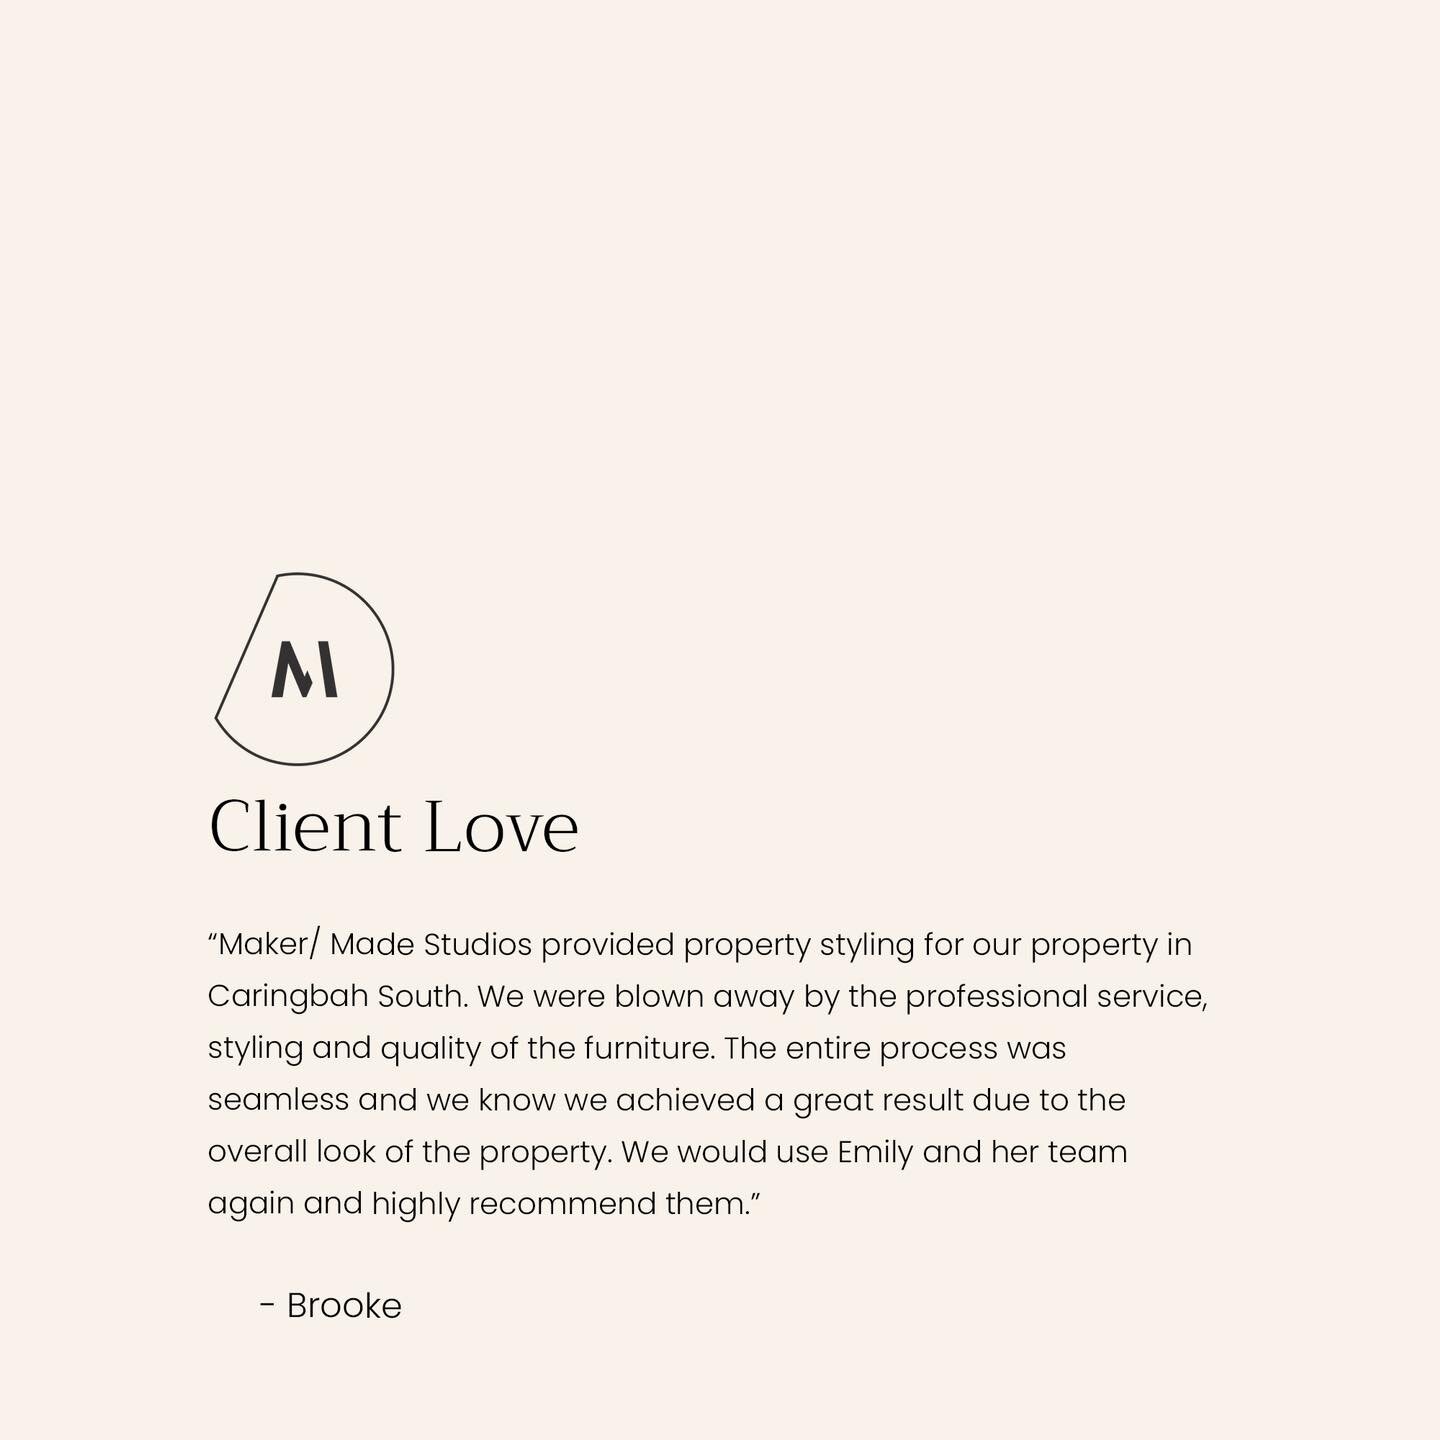 Client Love #makermadestudios